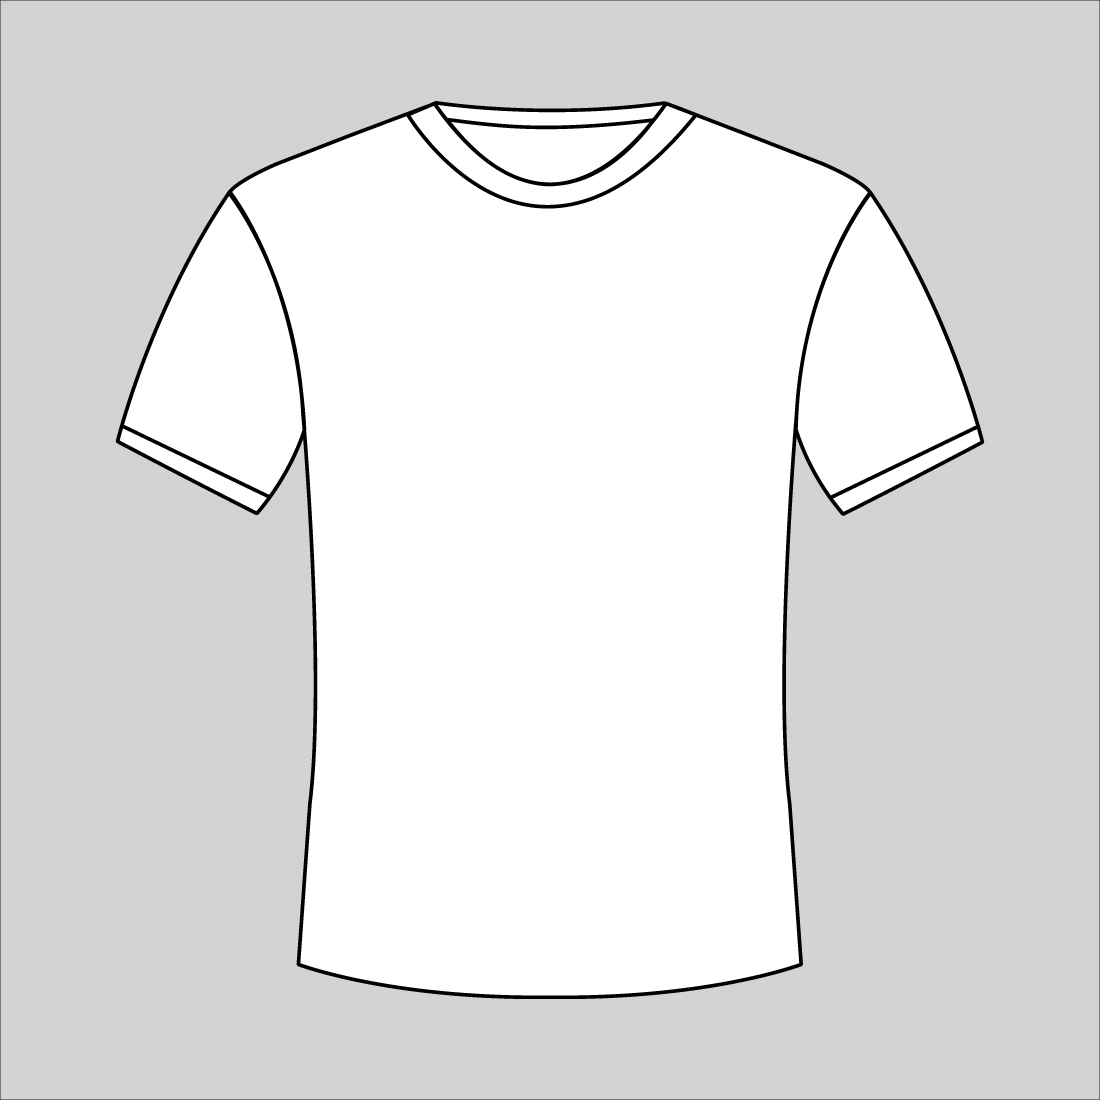 Free Customized T Shirt Design Template